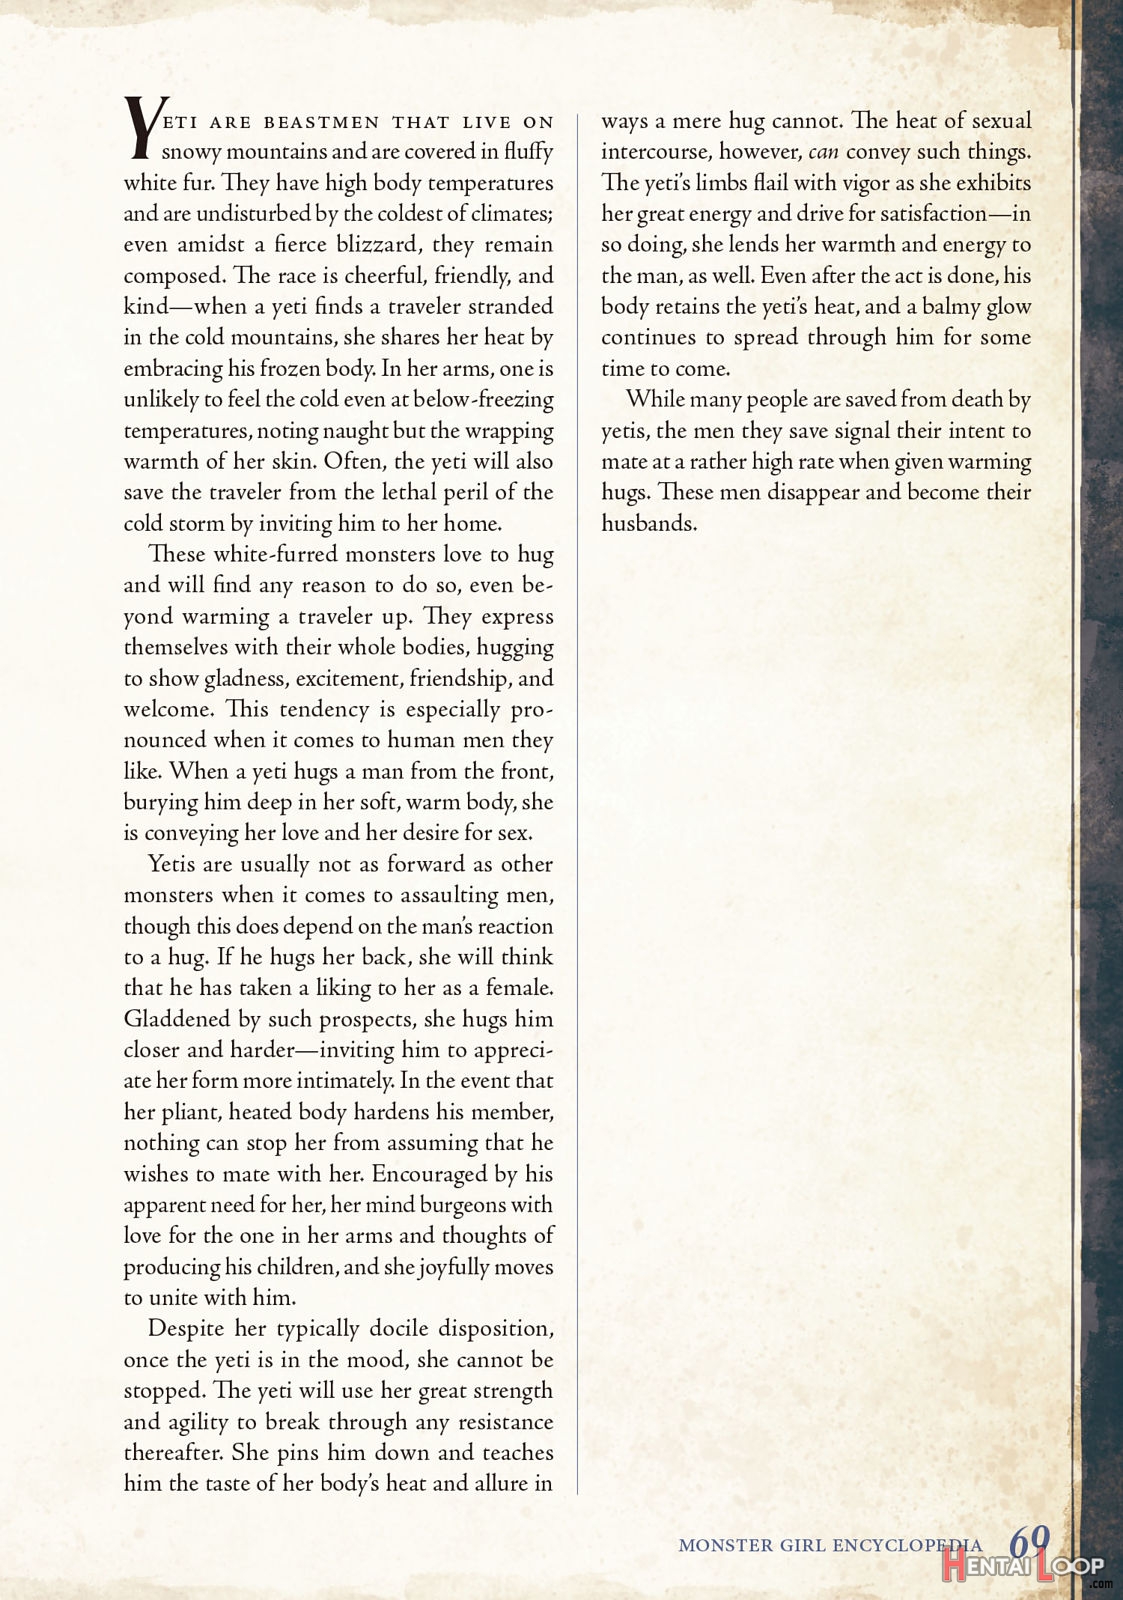 Monster Girl Encyclopedia Vol. 2 page 70